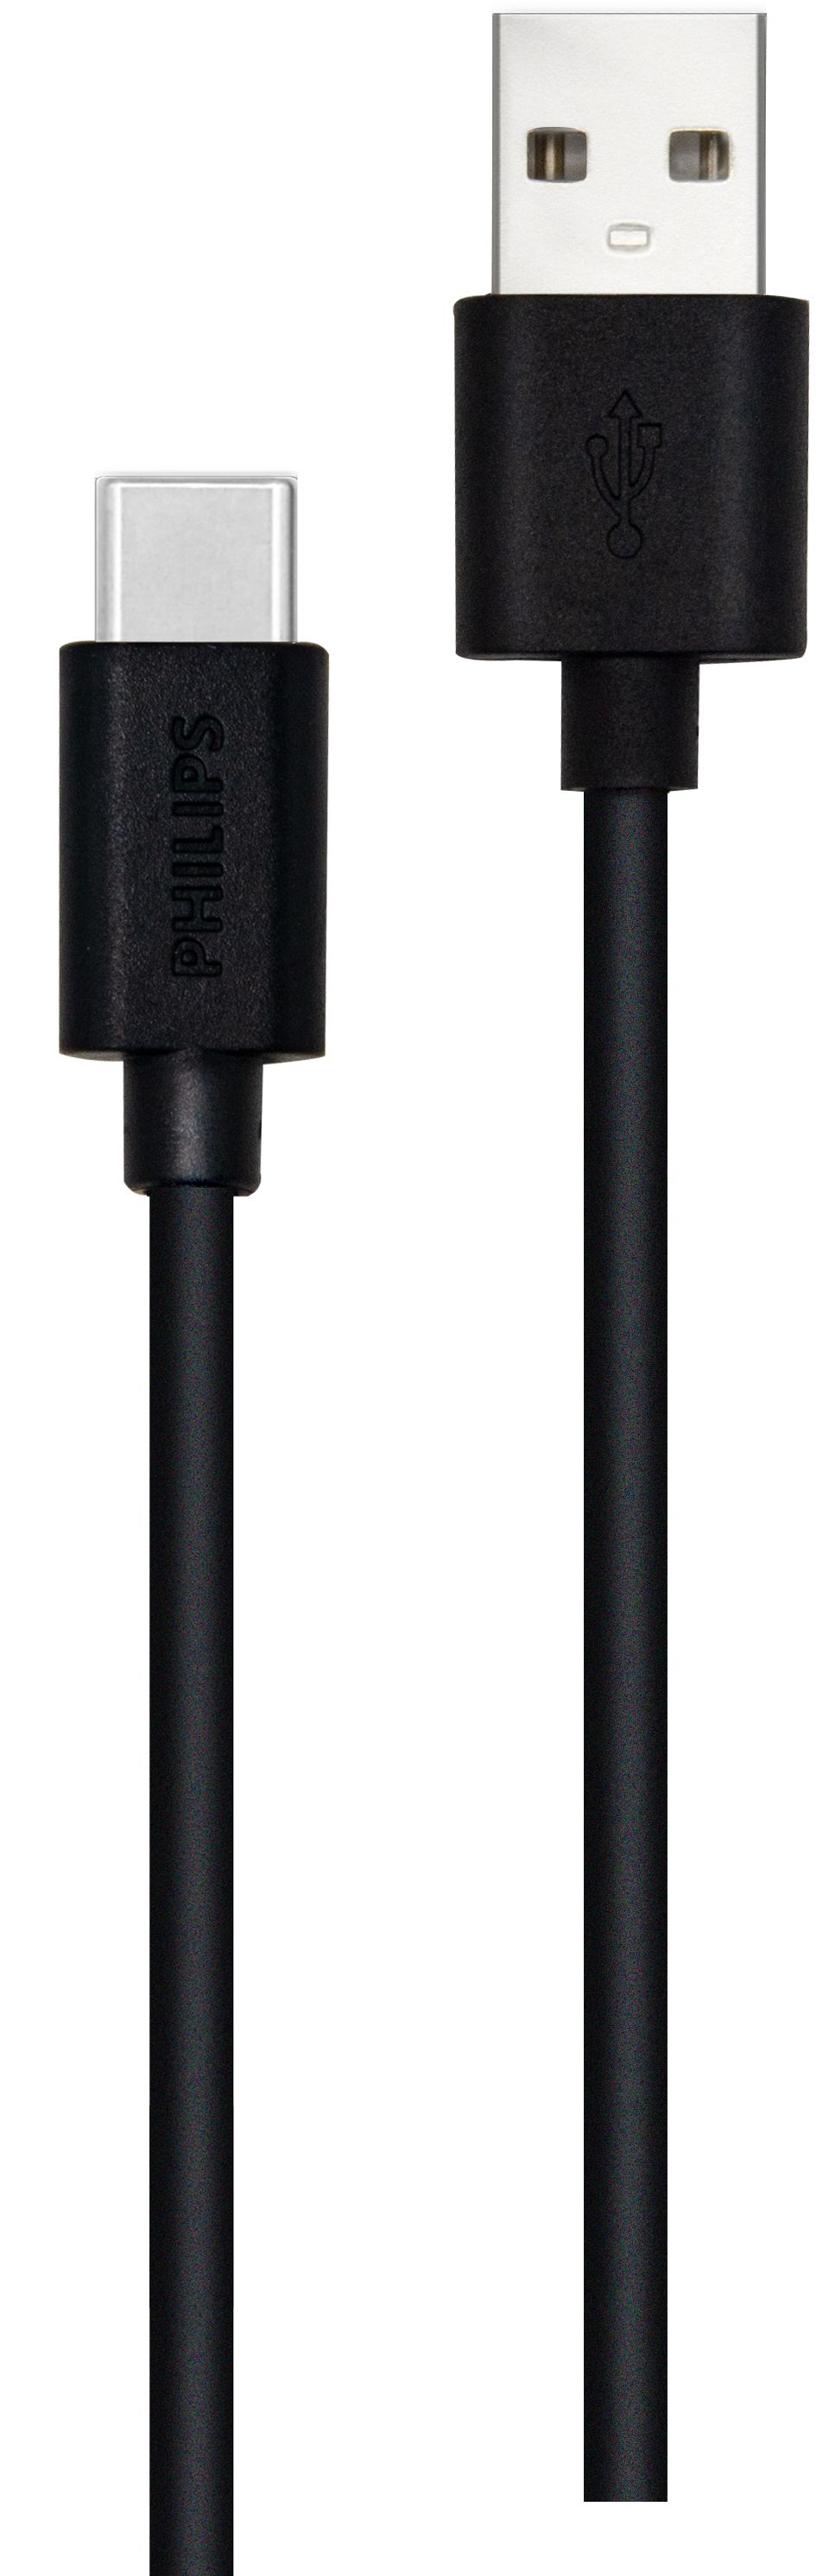 1,2 m USB-A-auf-USB-C-Kabel